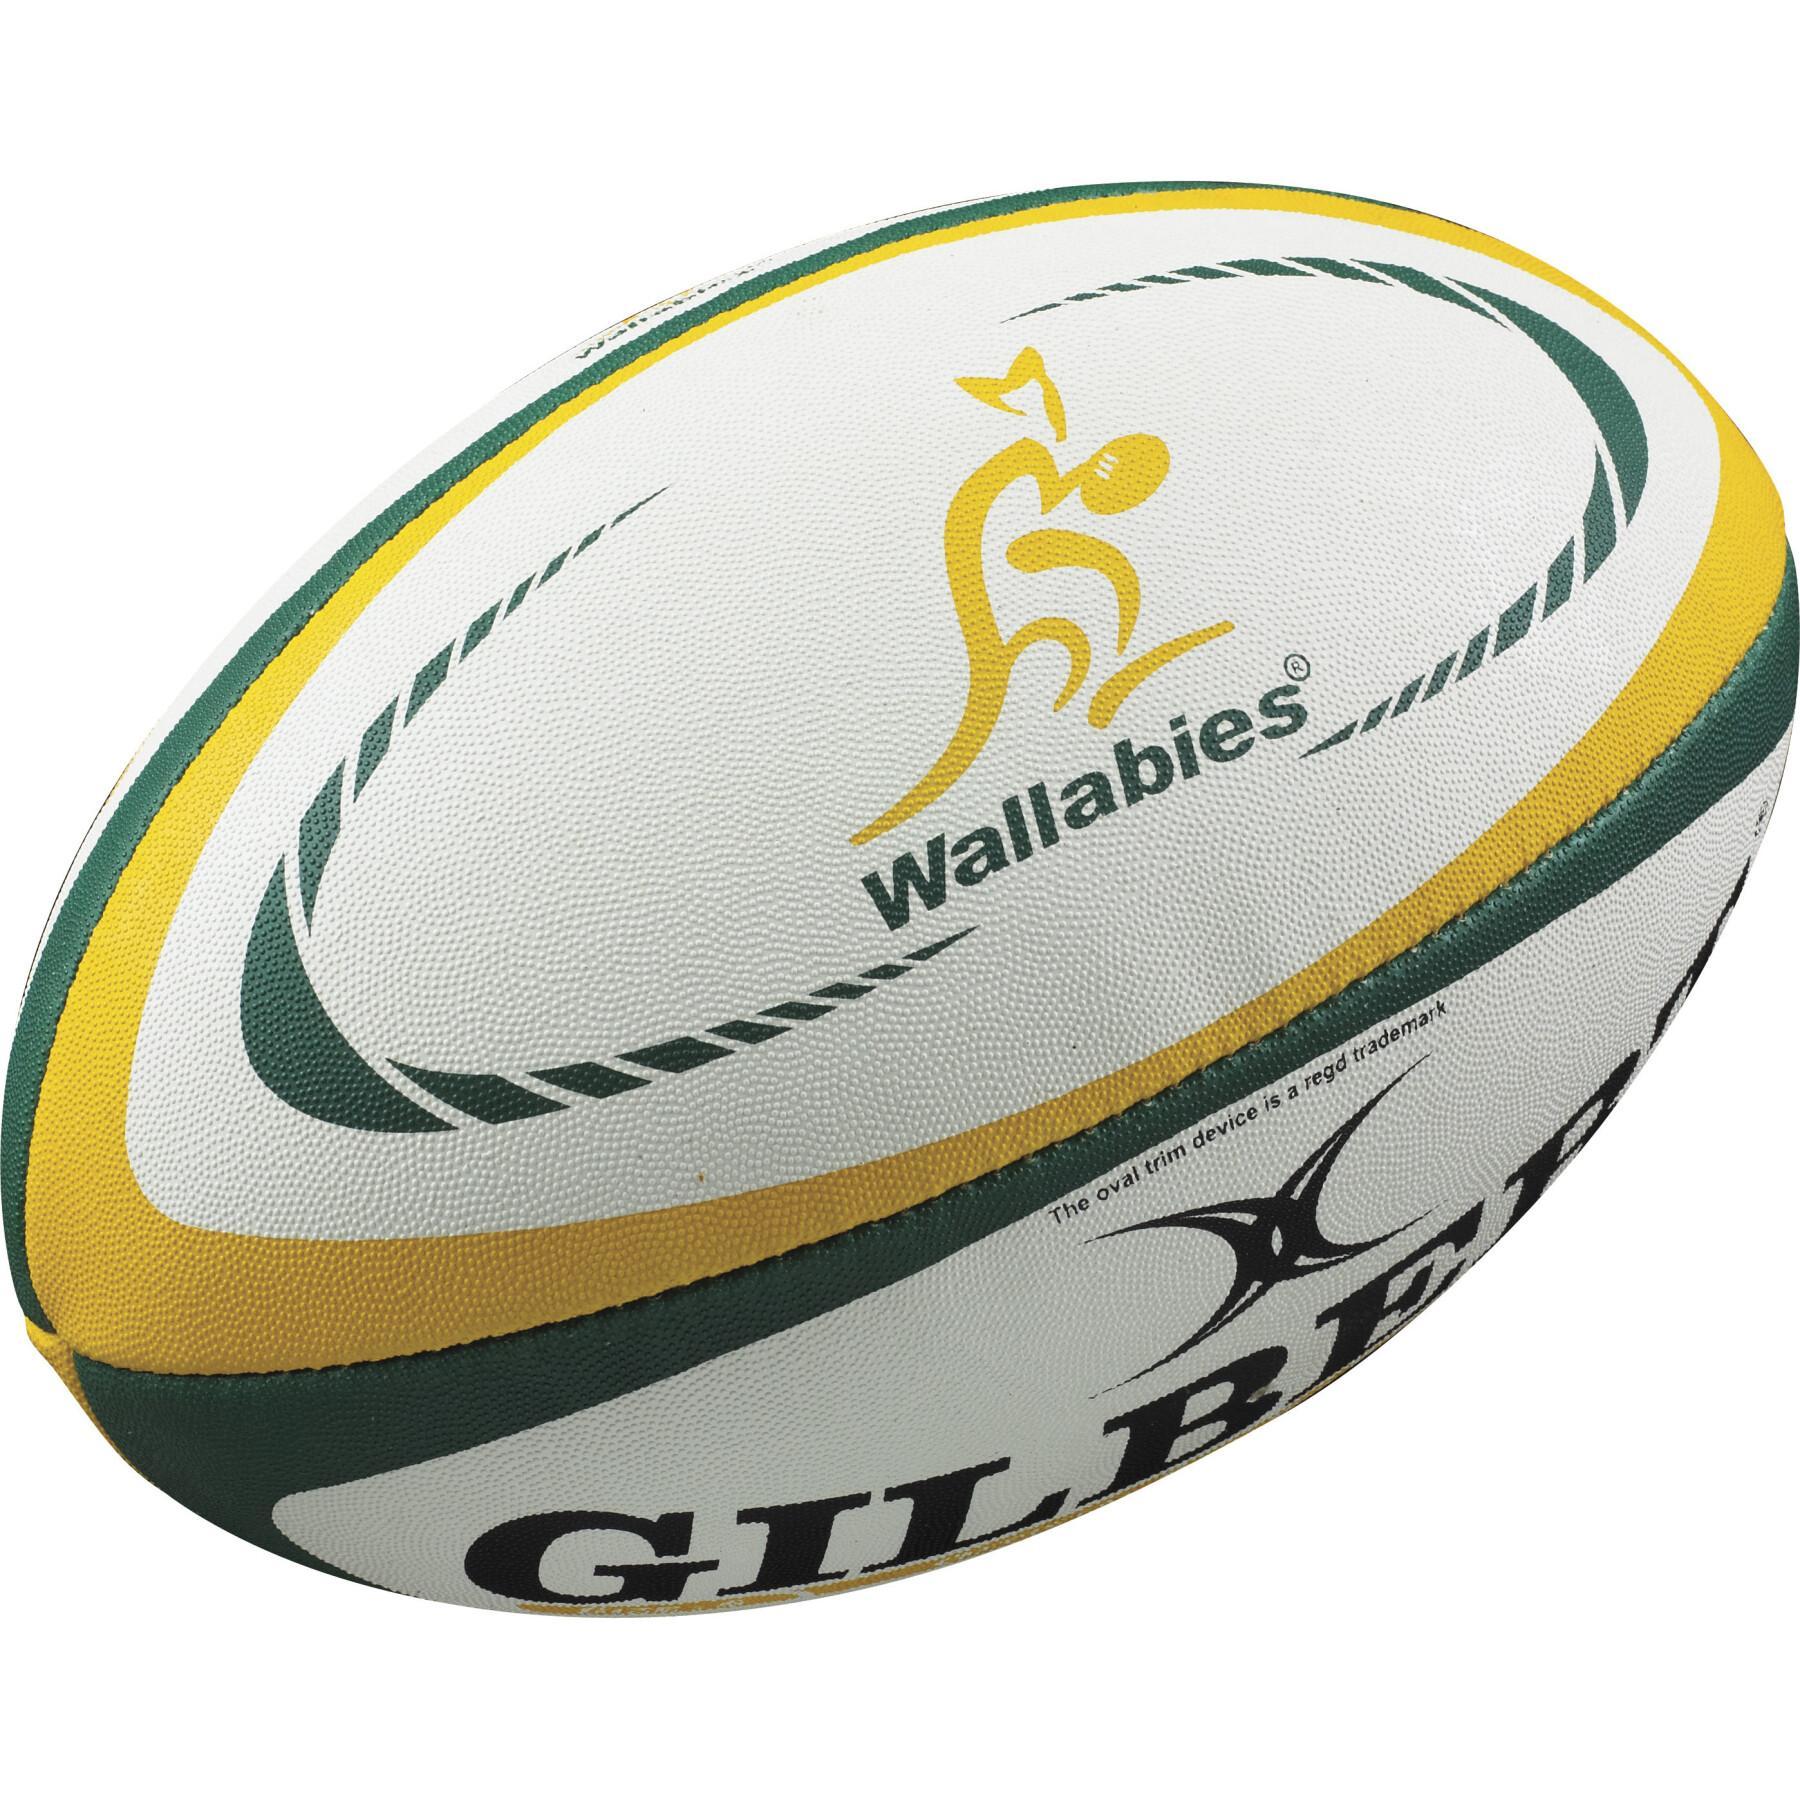 Mini replika rugbyboll Gilbert Australie (taille 1)